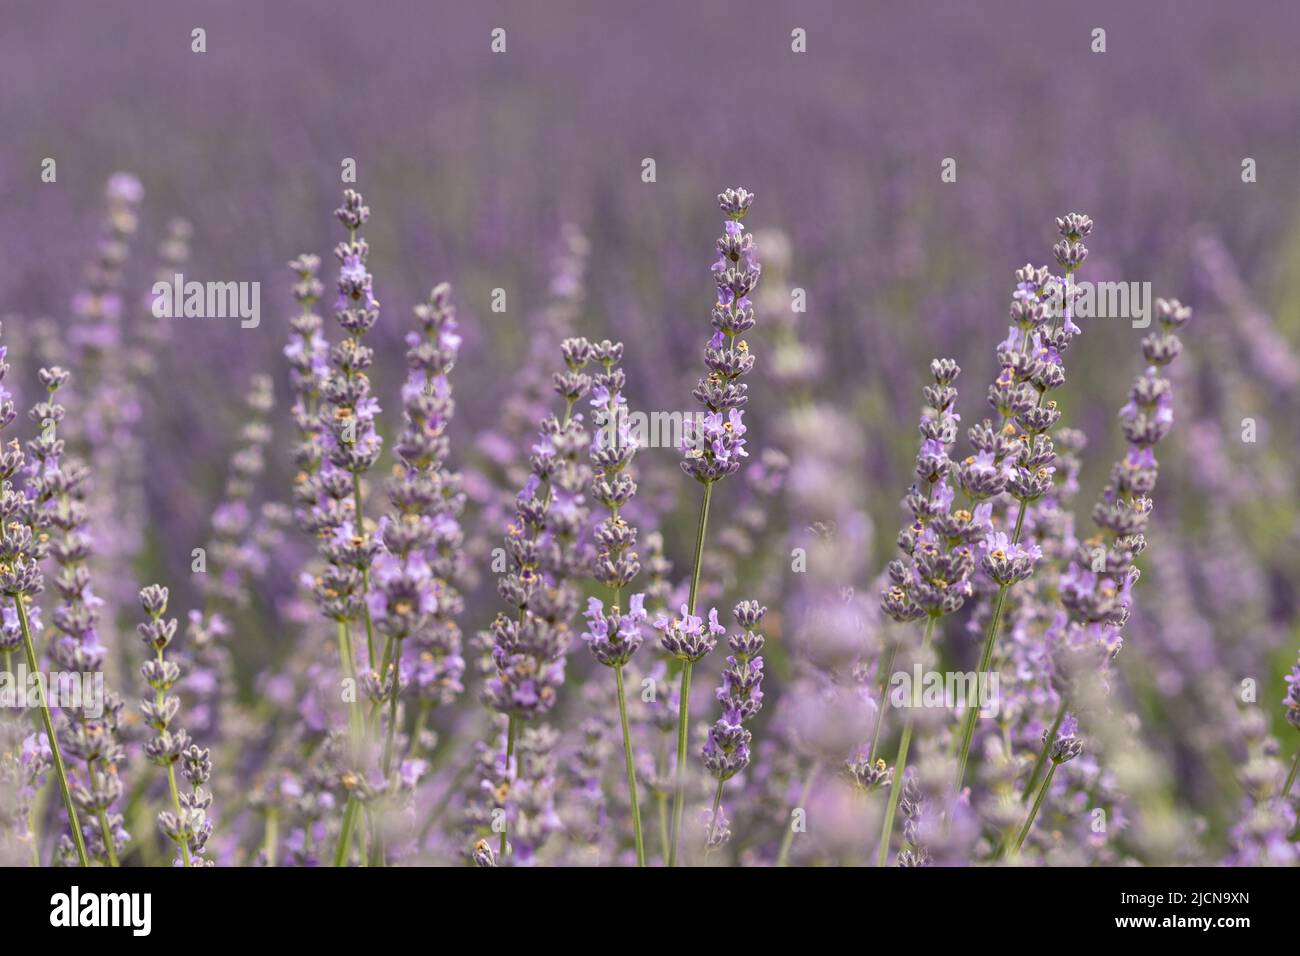 Purple Lavender Flowers In Bloom in Lavender Field Stock Photo